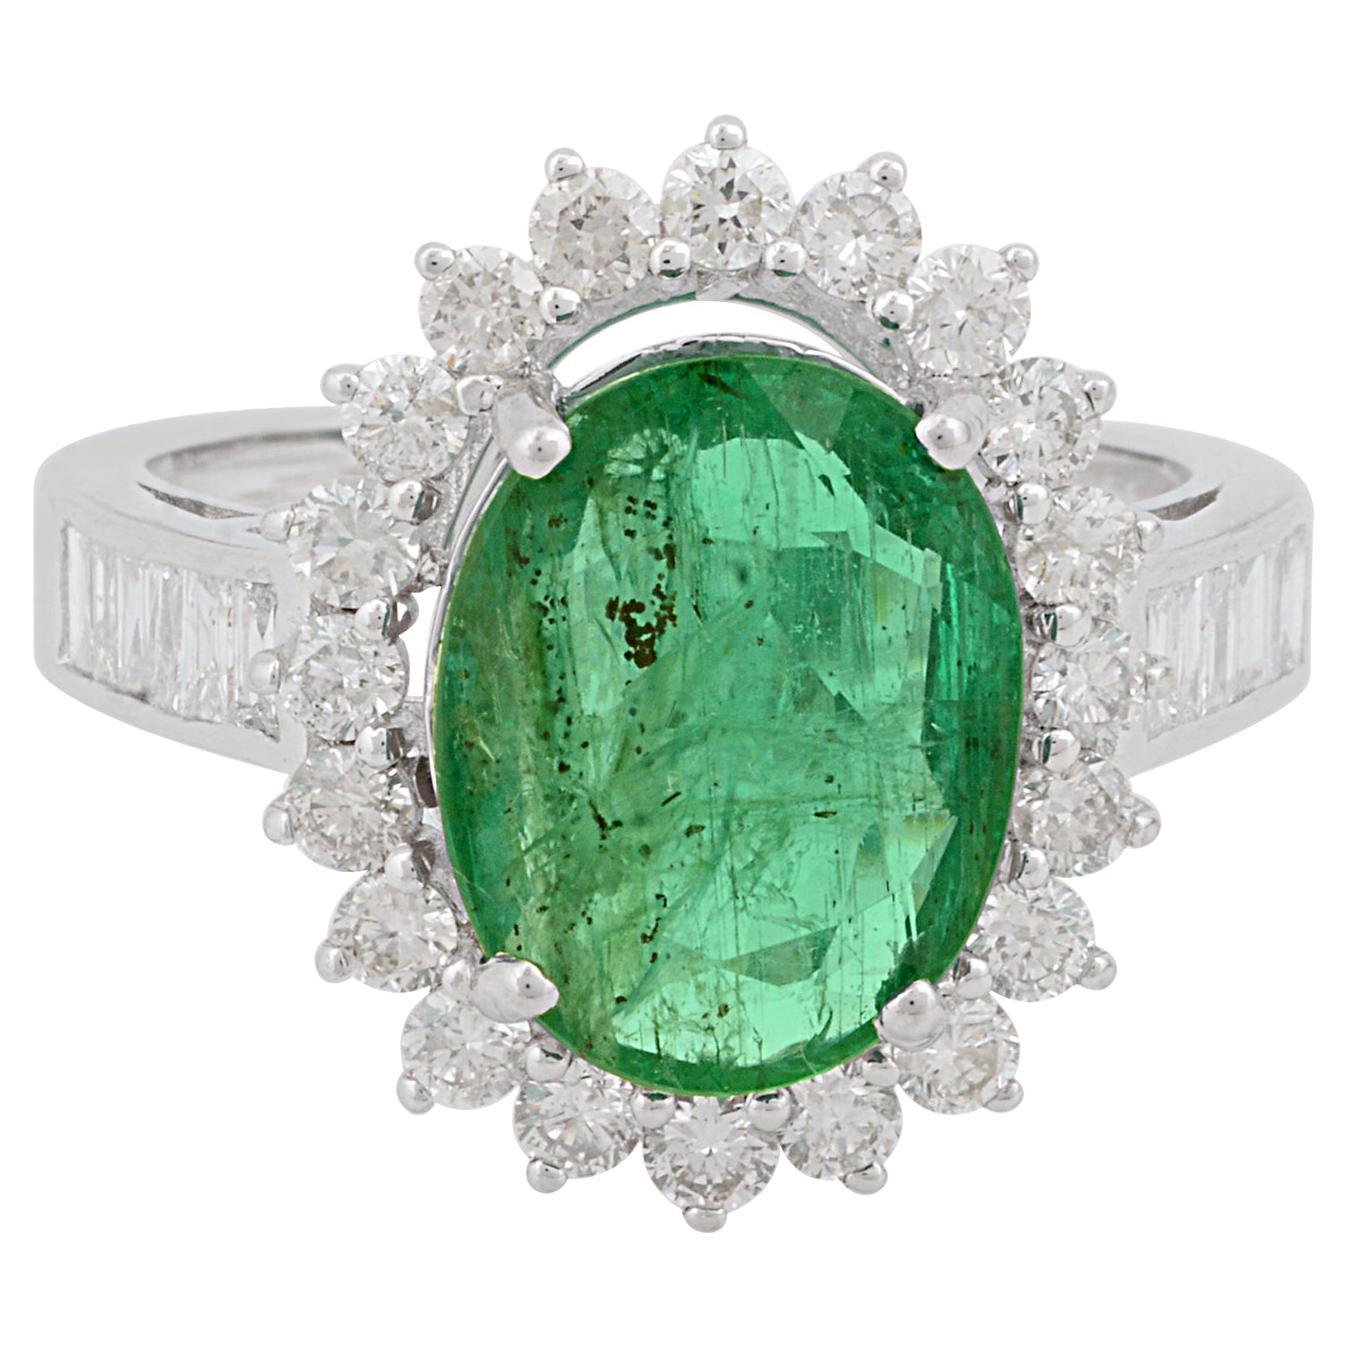 Oval Natural Emerald Gemstone Cocktail Ring Diamond 10 Karat White Gold Jewelry